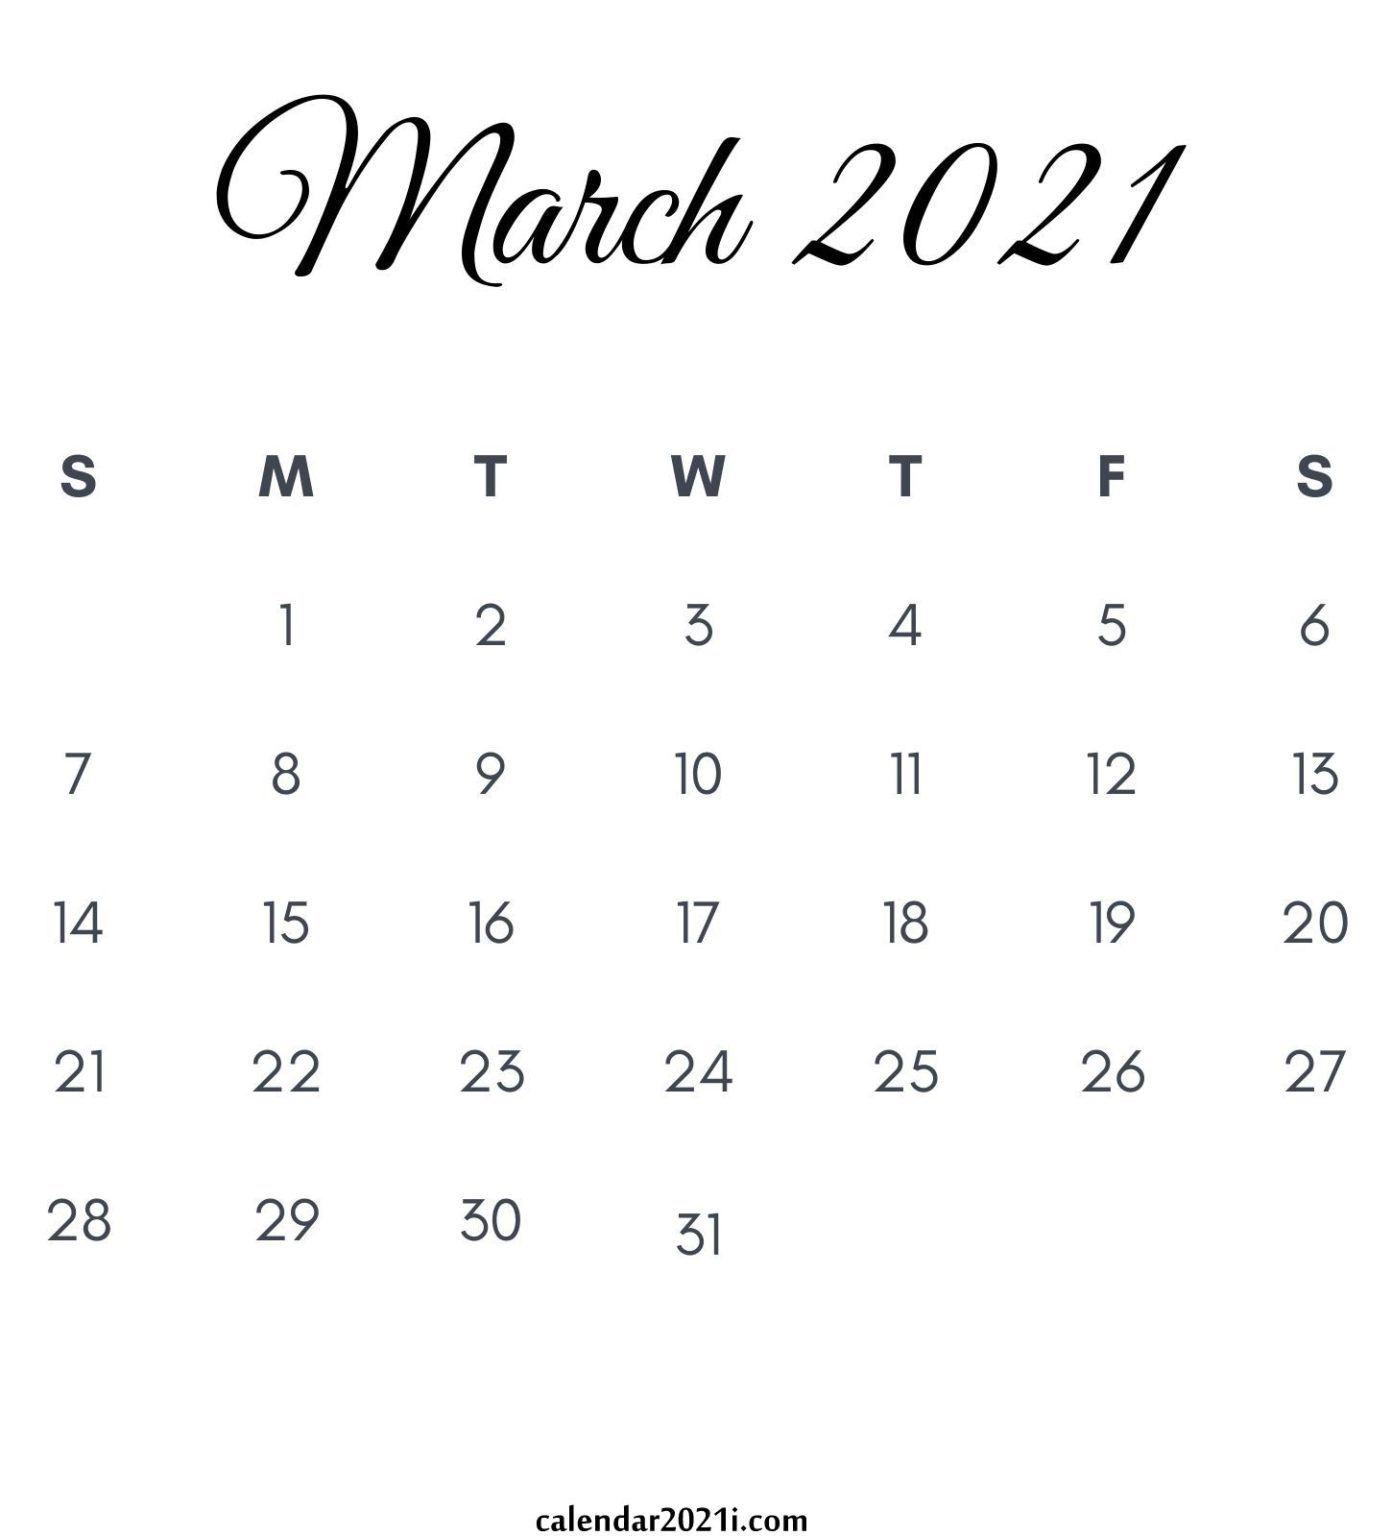 March 2021 Calendar Wallpapers Top Free March 2021 Calendar